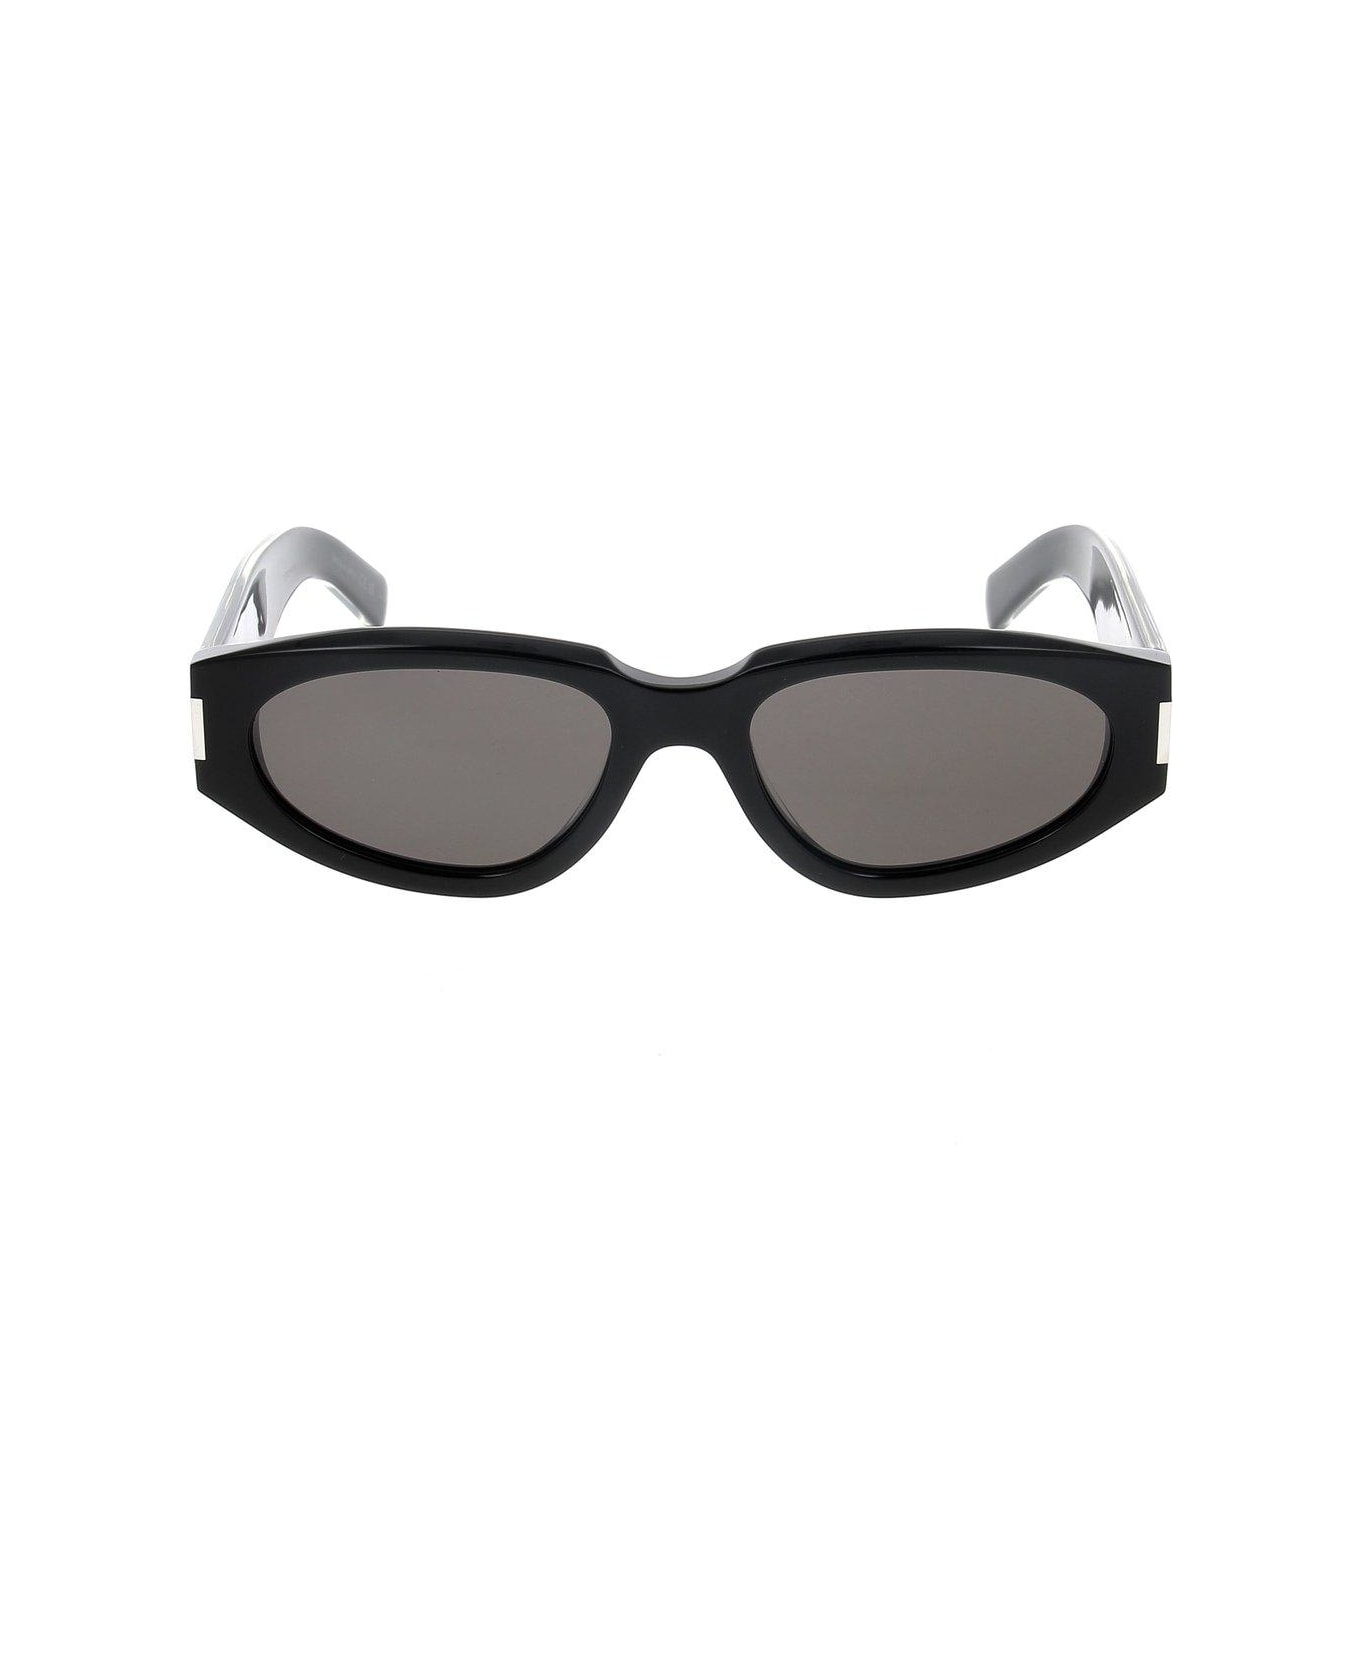 Saint Laurent Eyewear Rectangular Frame Sunglasses - 001 black crystal black